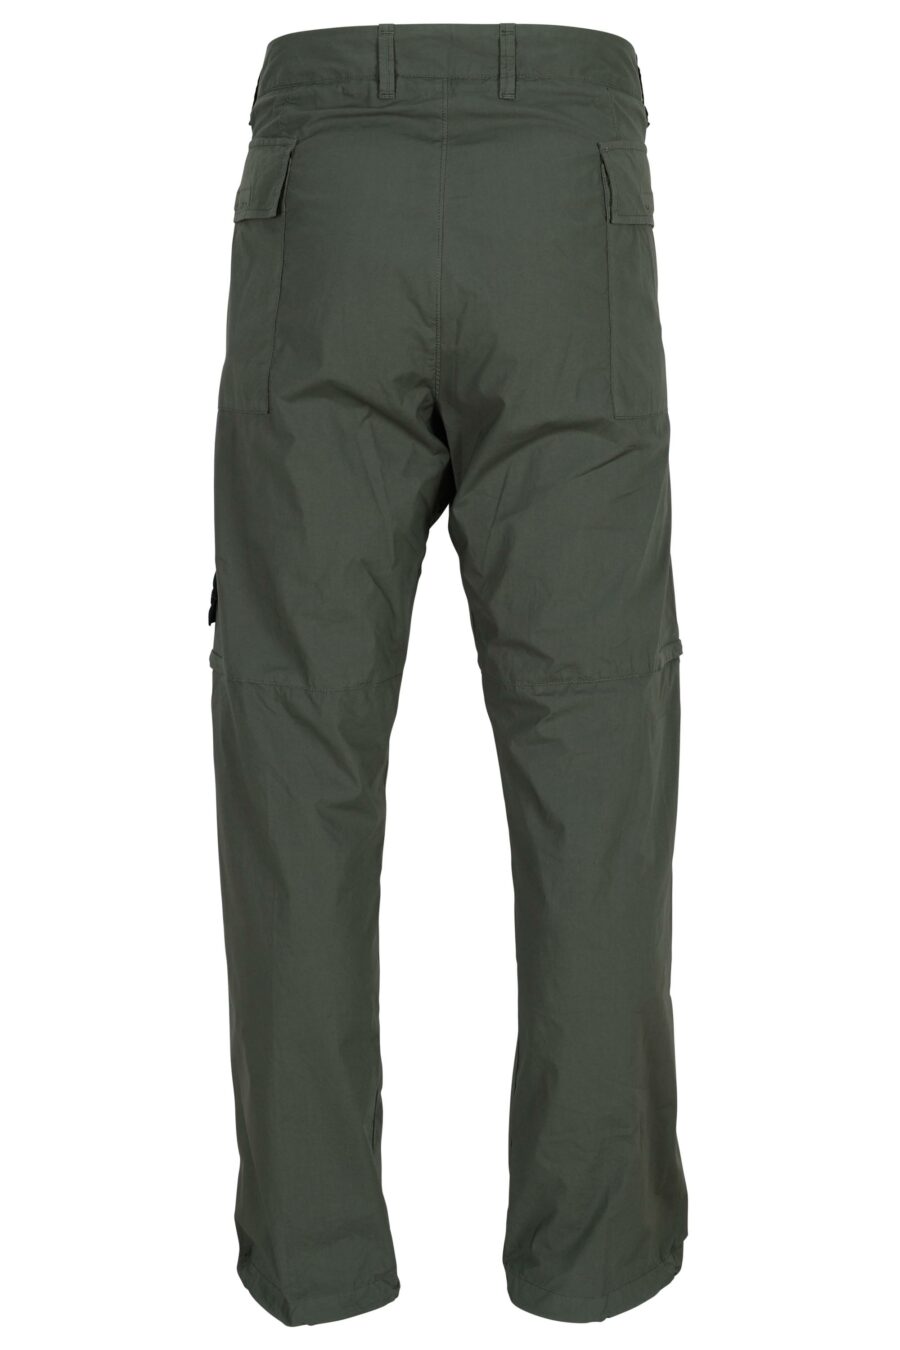 Pantalon "regular" vert militaire avec logo boussole - 8052572955013 1